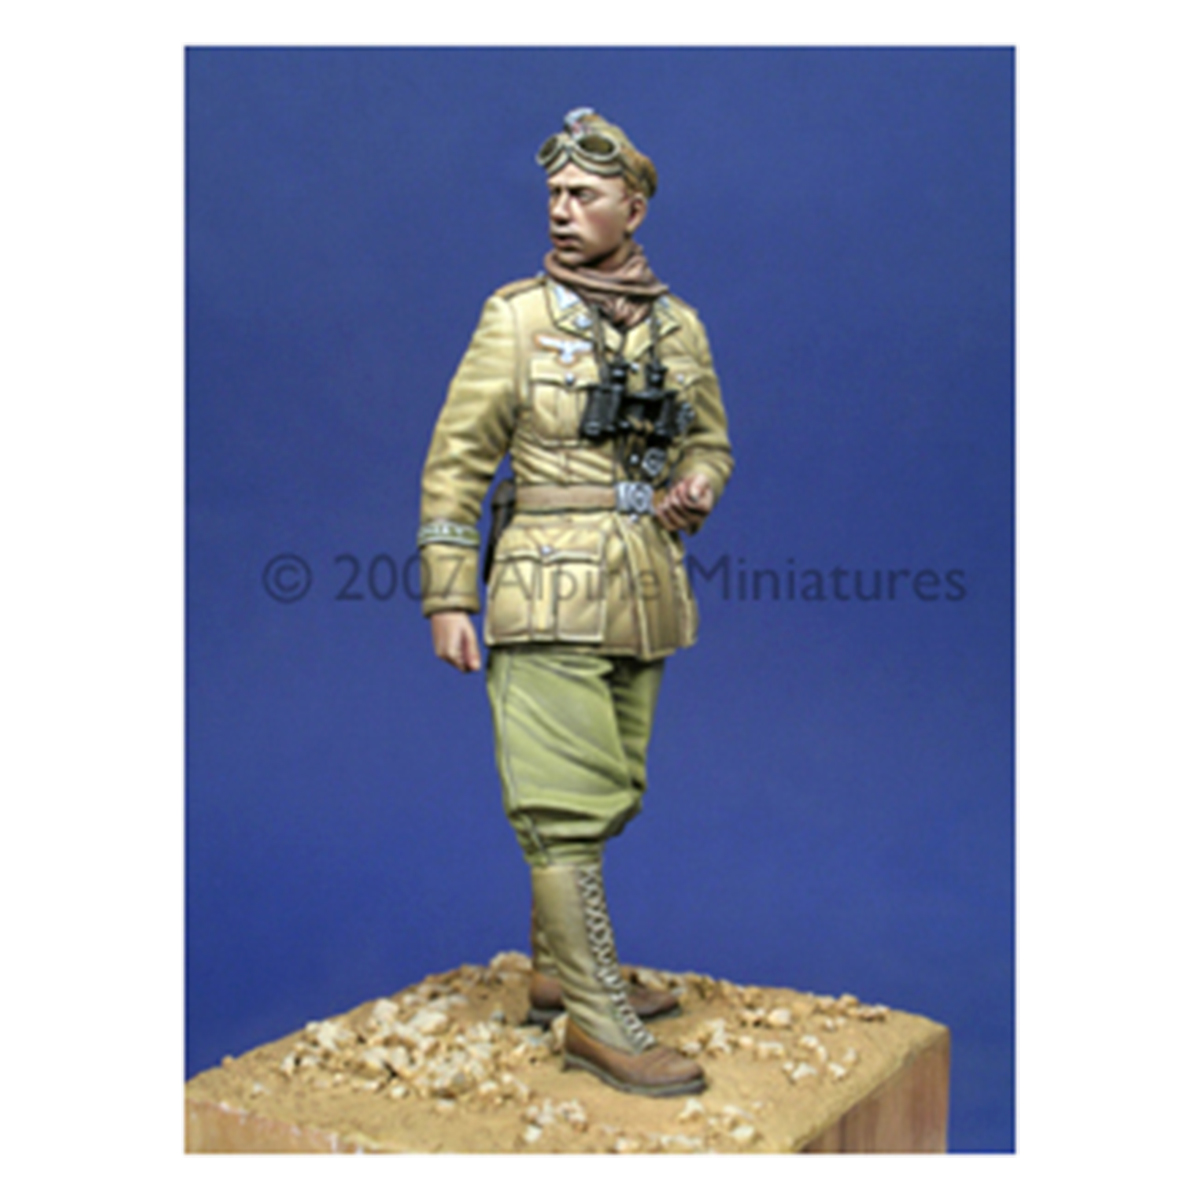 Alpine Miniatures – DAK Panzer Officer 1/35